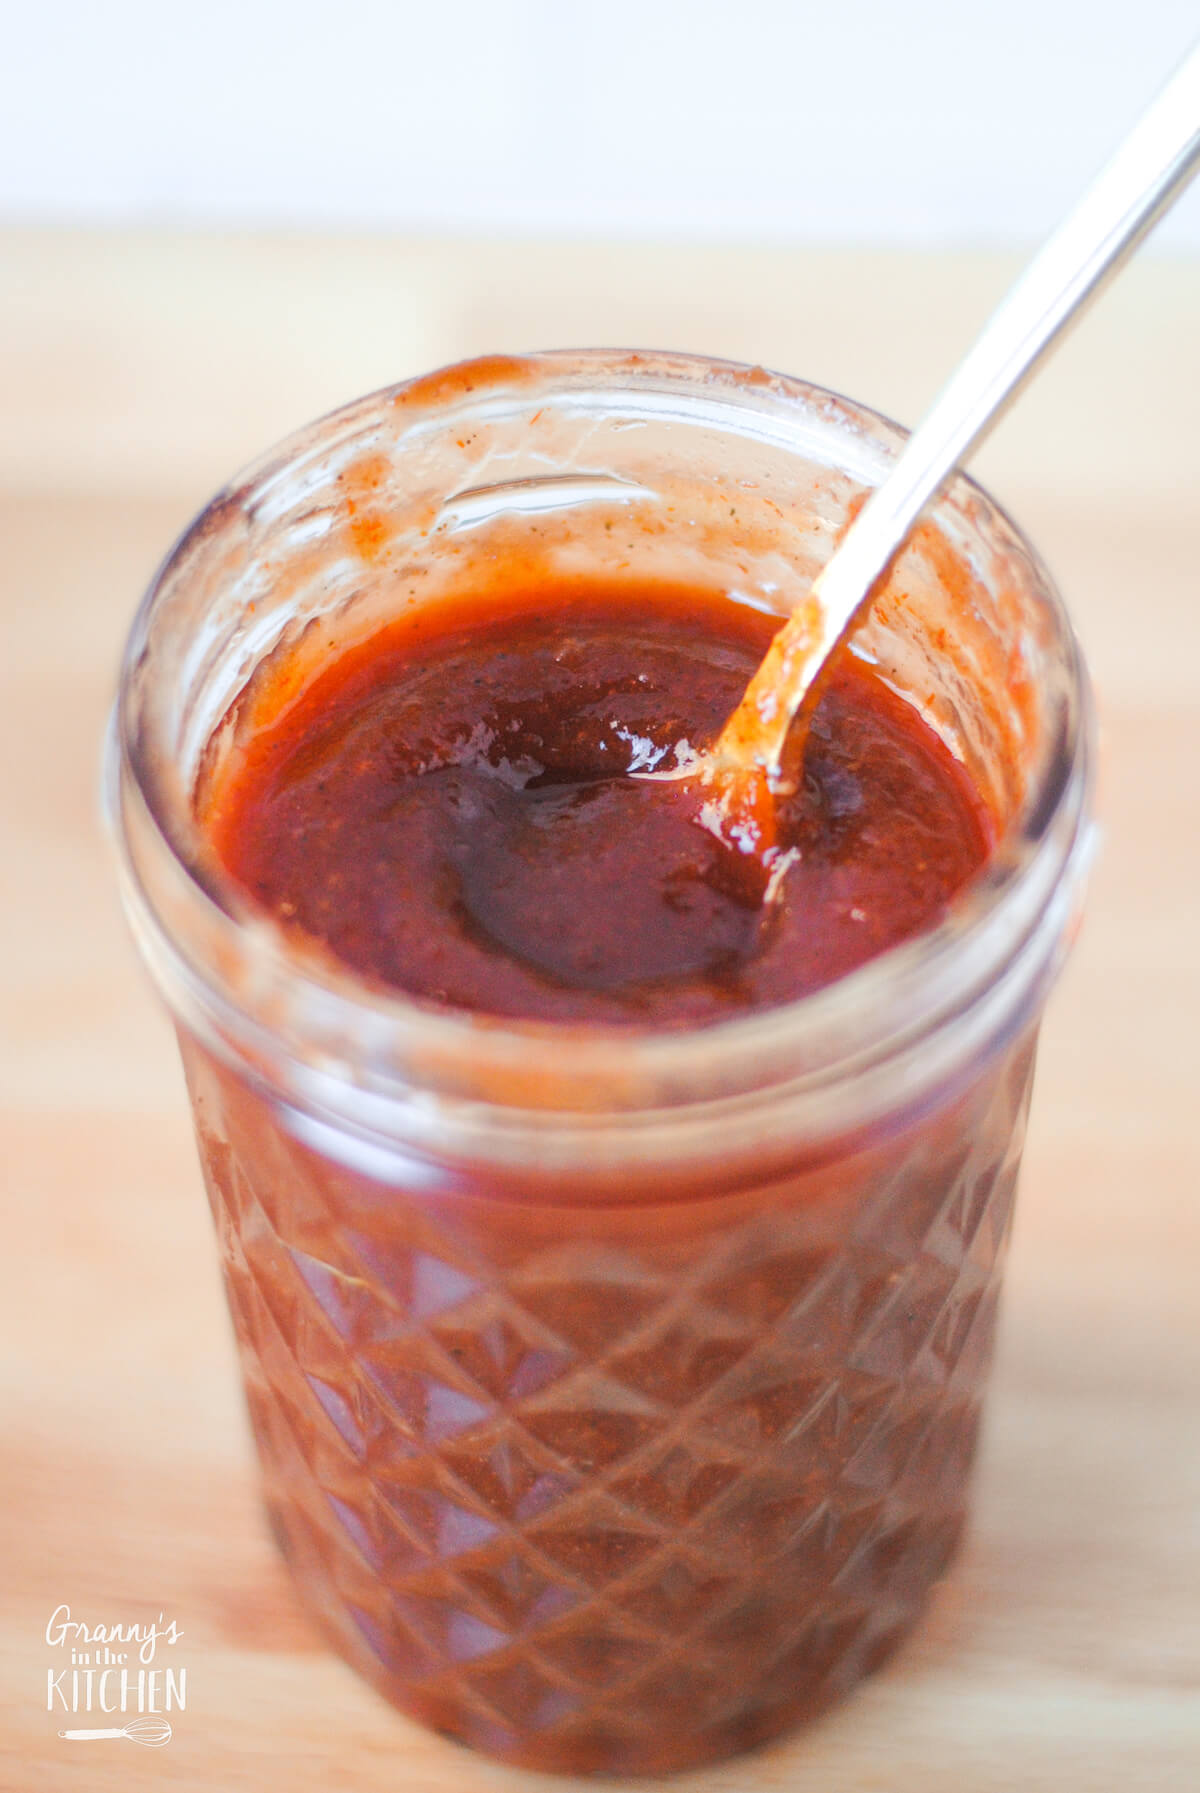 mason jar of homemade bbq sauce with a spoon inside.